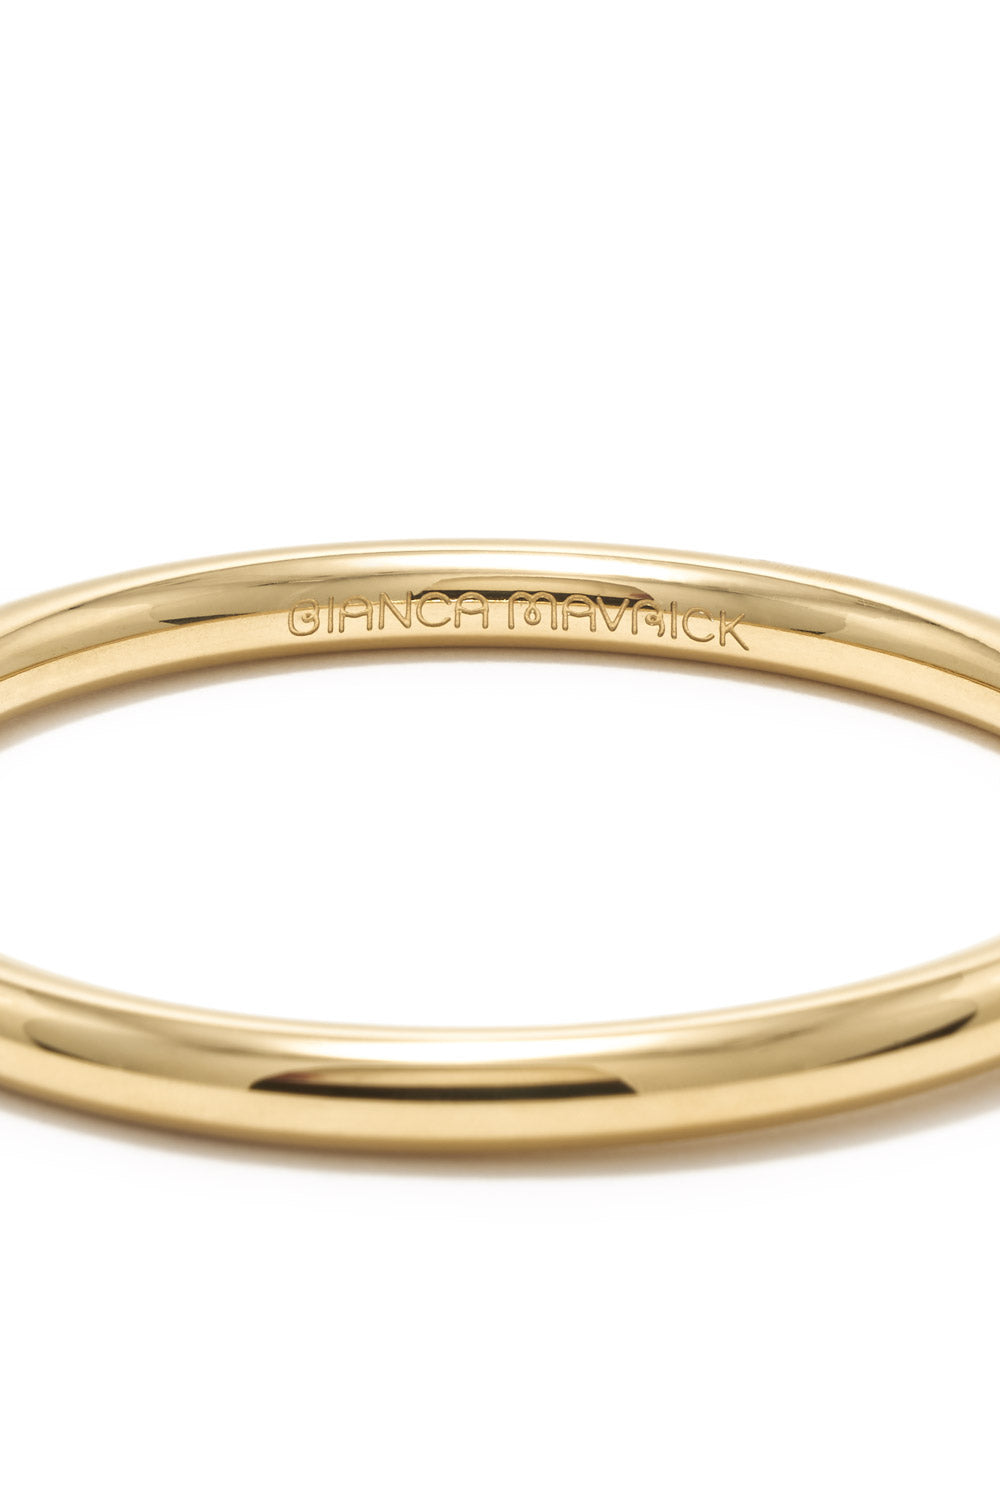 Bianca Mavrick Jewellery Gold Forma Bangle Logo Engraved Detail